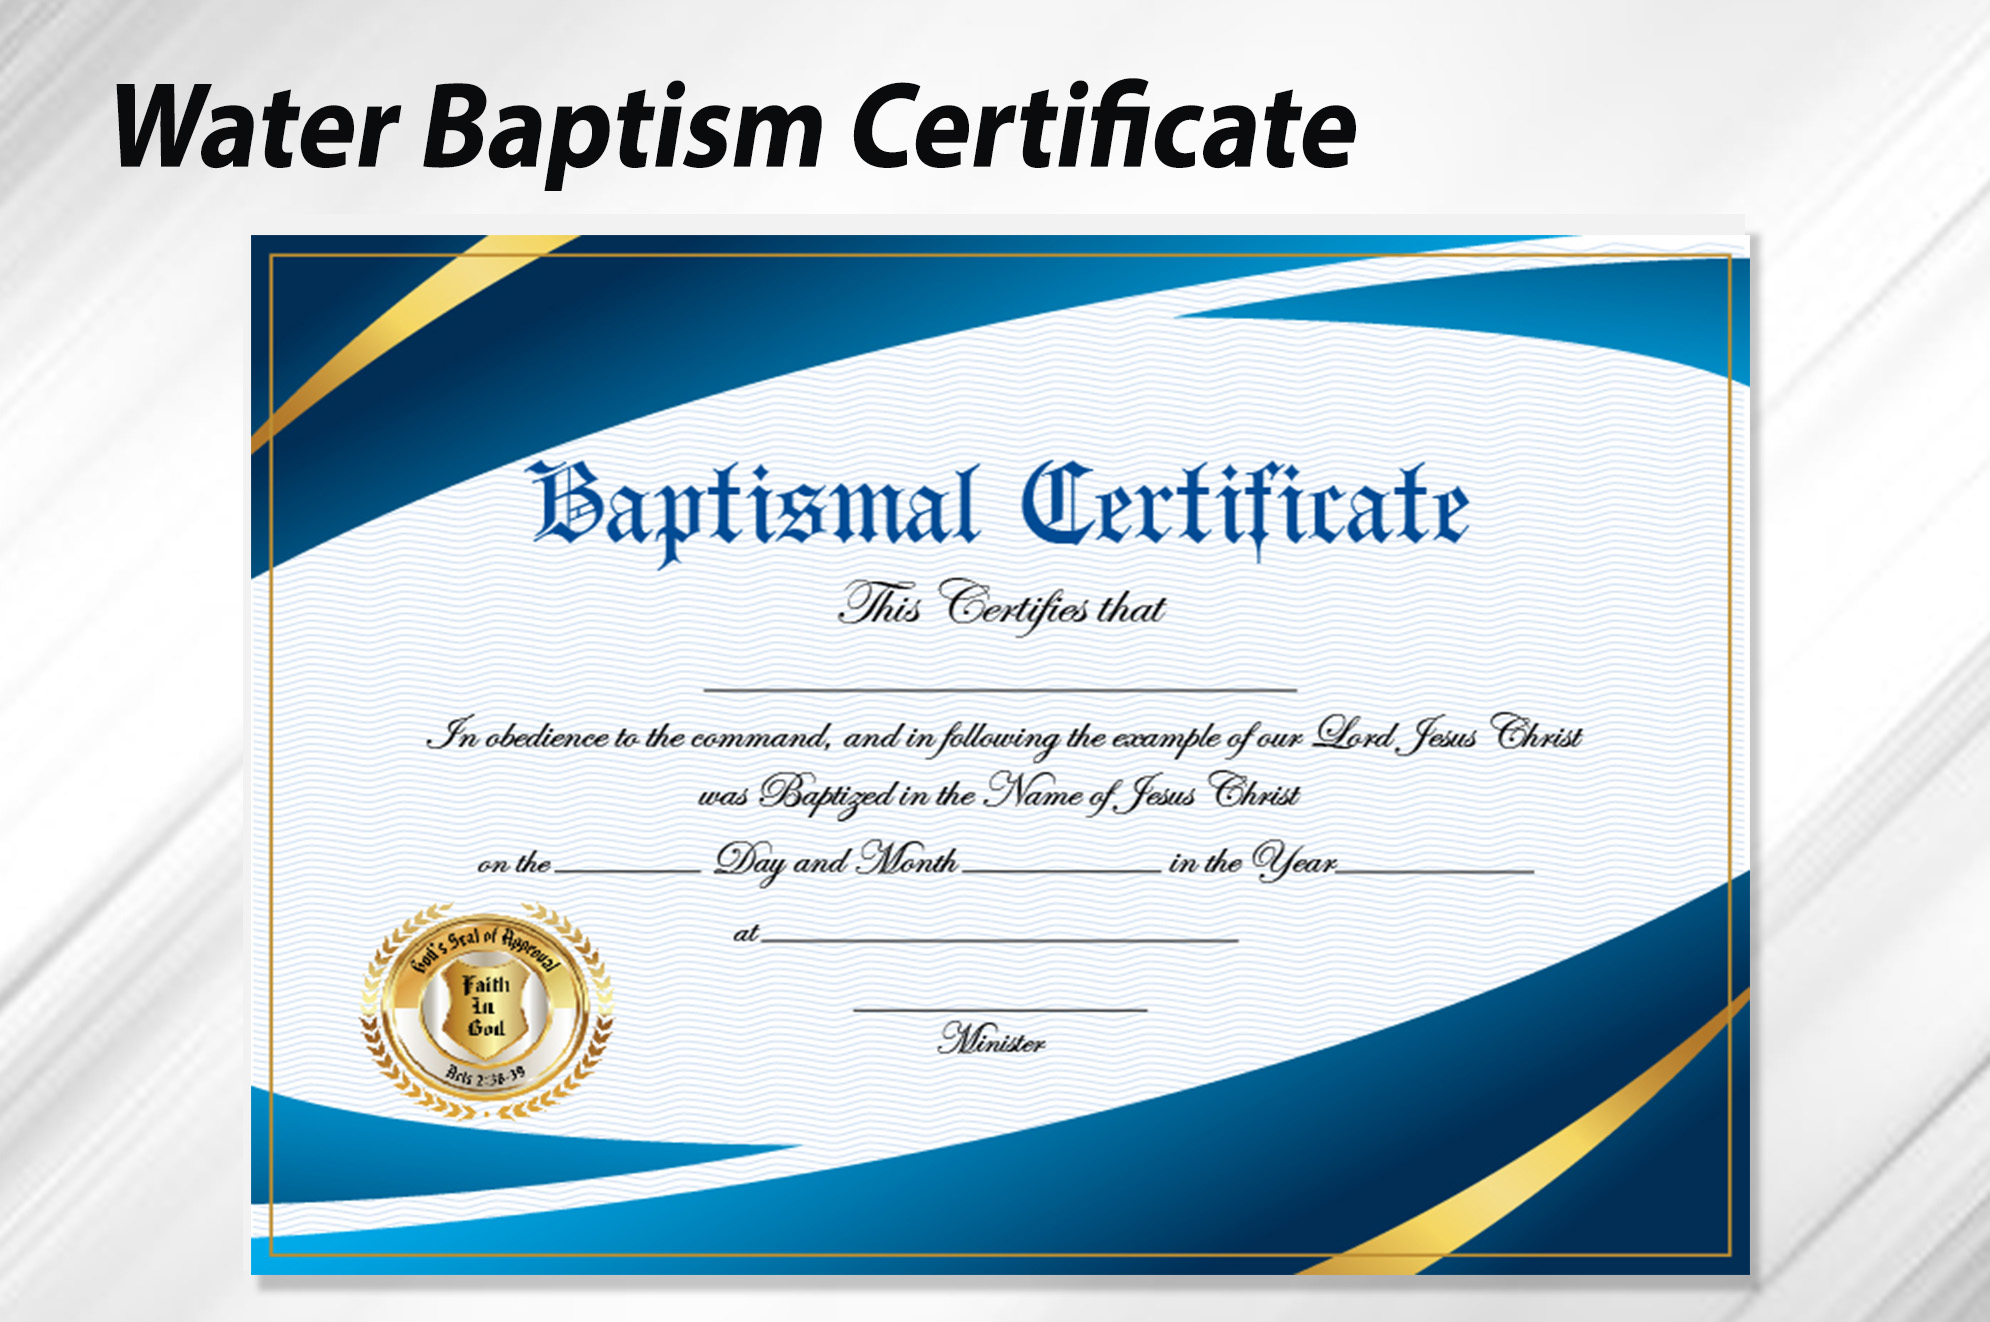 Water Baptism Certificate Free